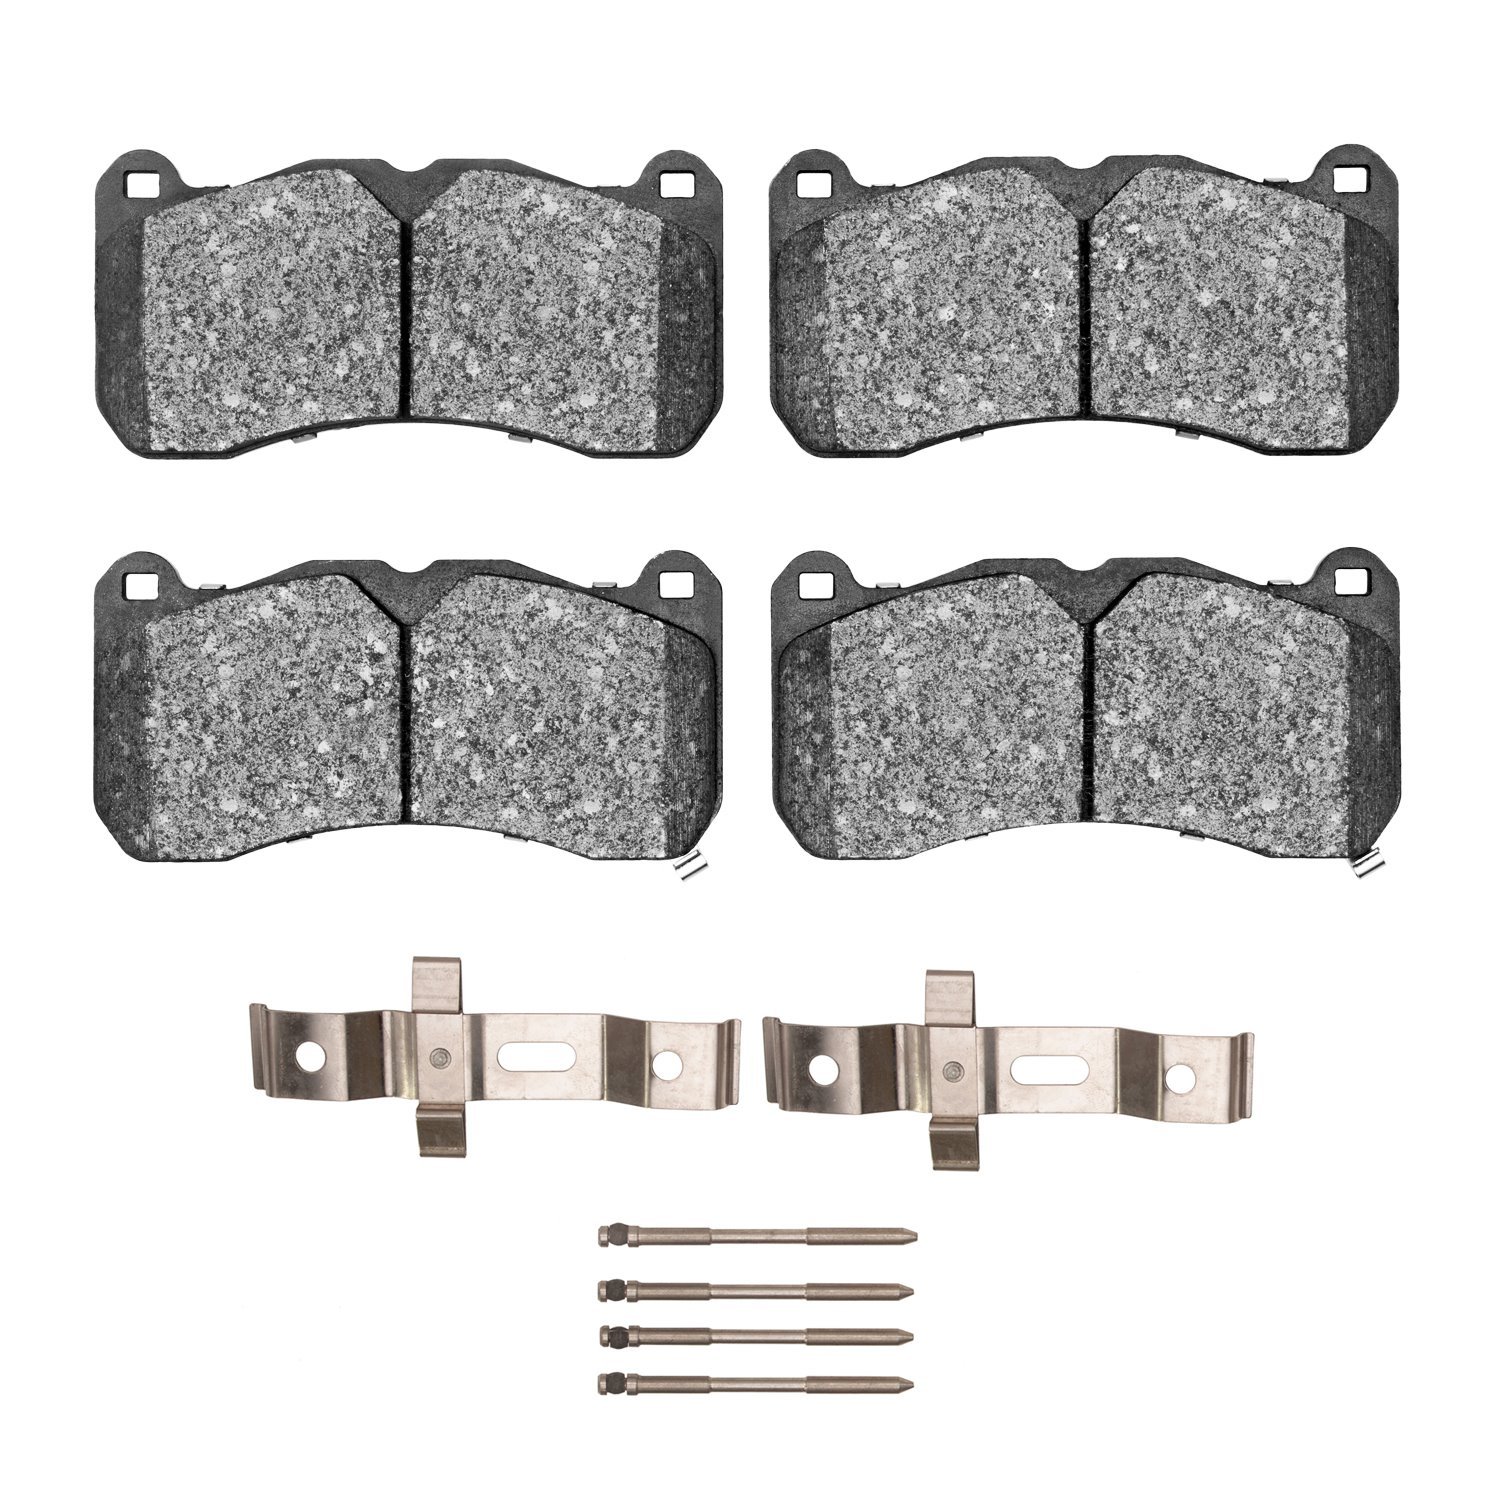 1551-1666-01 5000 Advanced Low-Metallic Brake Pads & Hardware Kit, 2013-2014 Ford/Lincoln/Mercury/Mazda, Position: Front